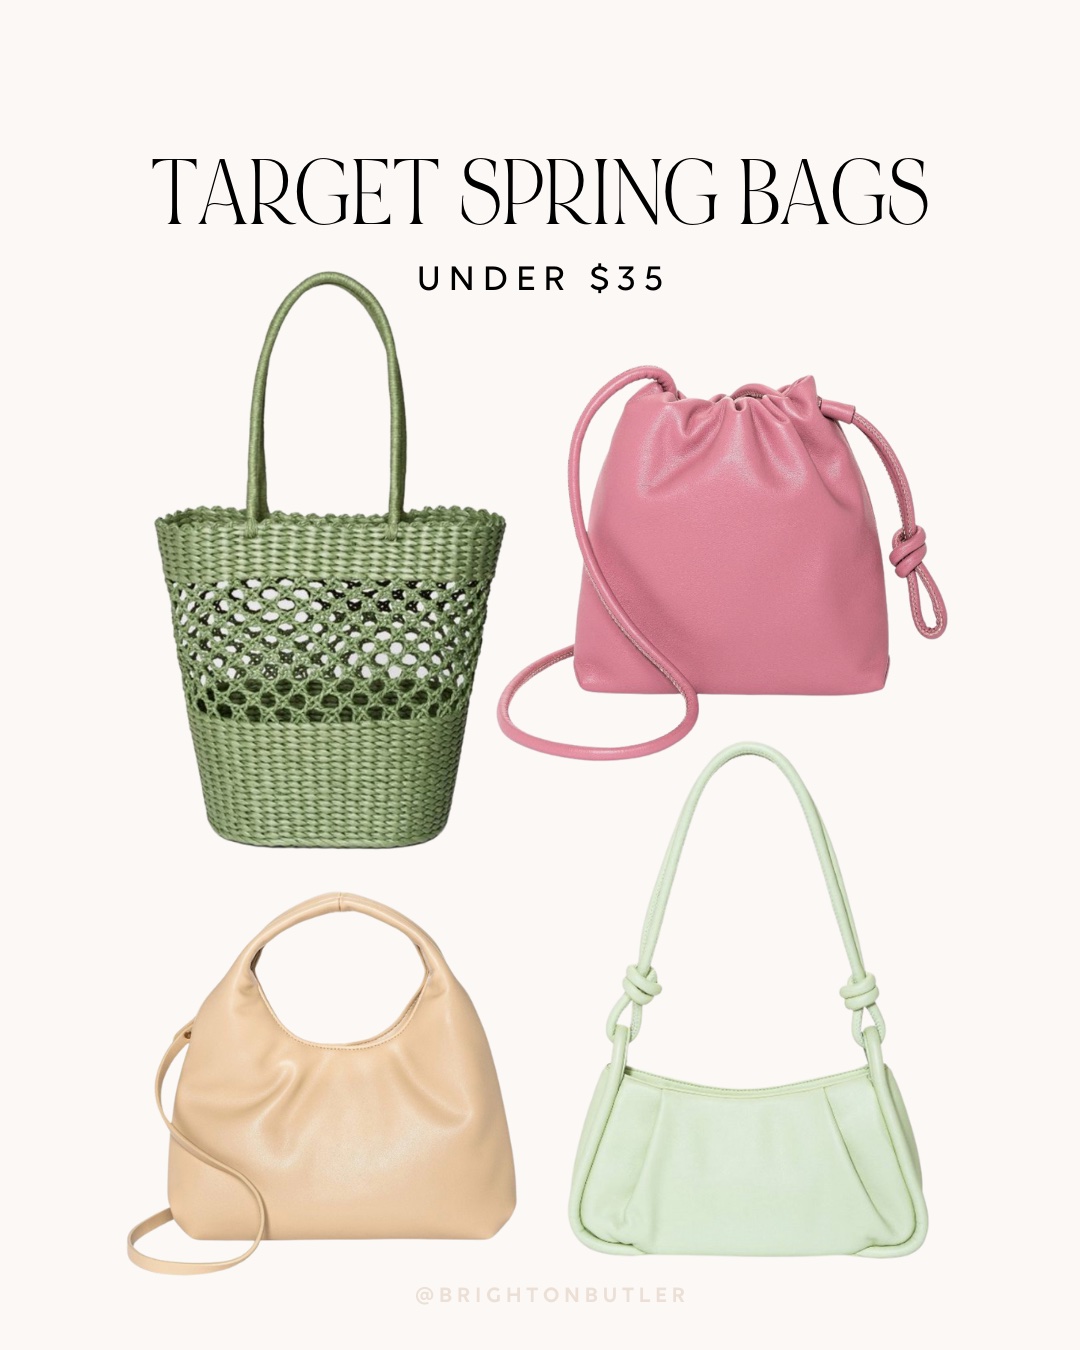 Brighton Butler Target Spring bags under $35